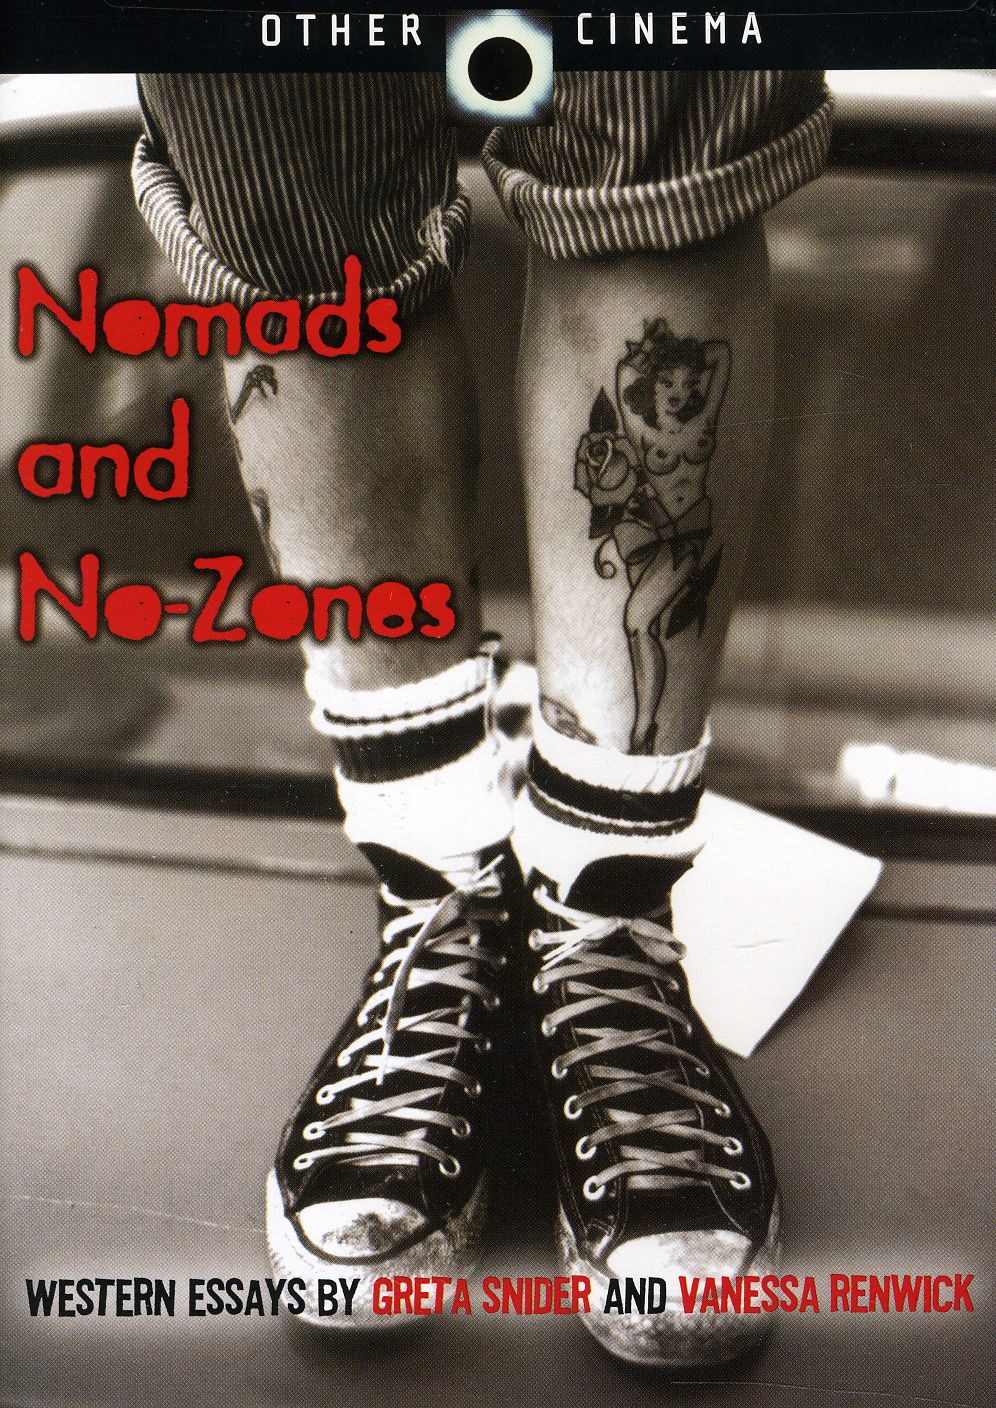 NOMADS & NO ZONES / (B&W COL FULL)